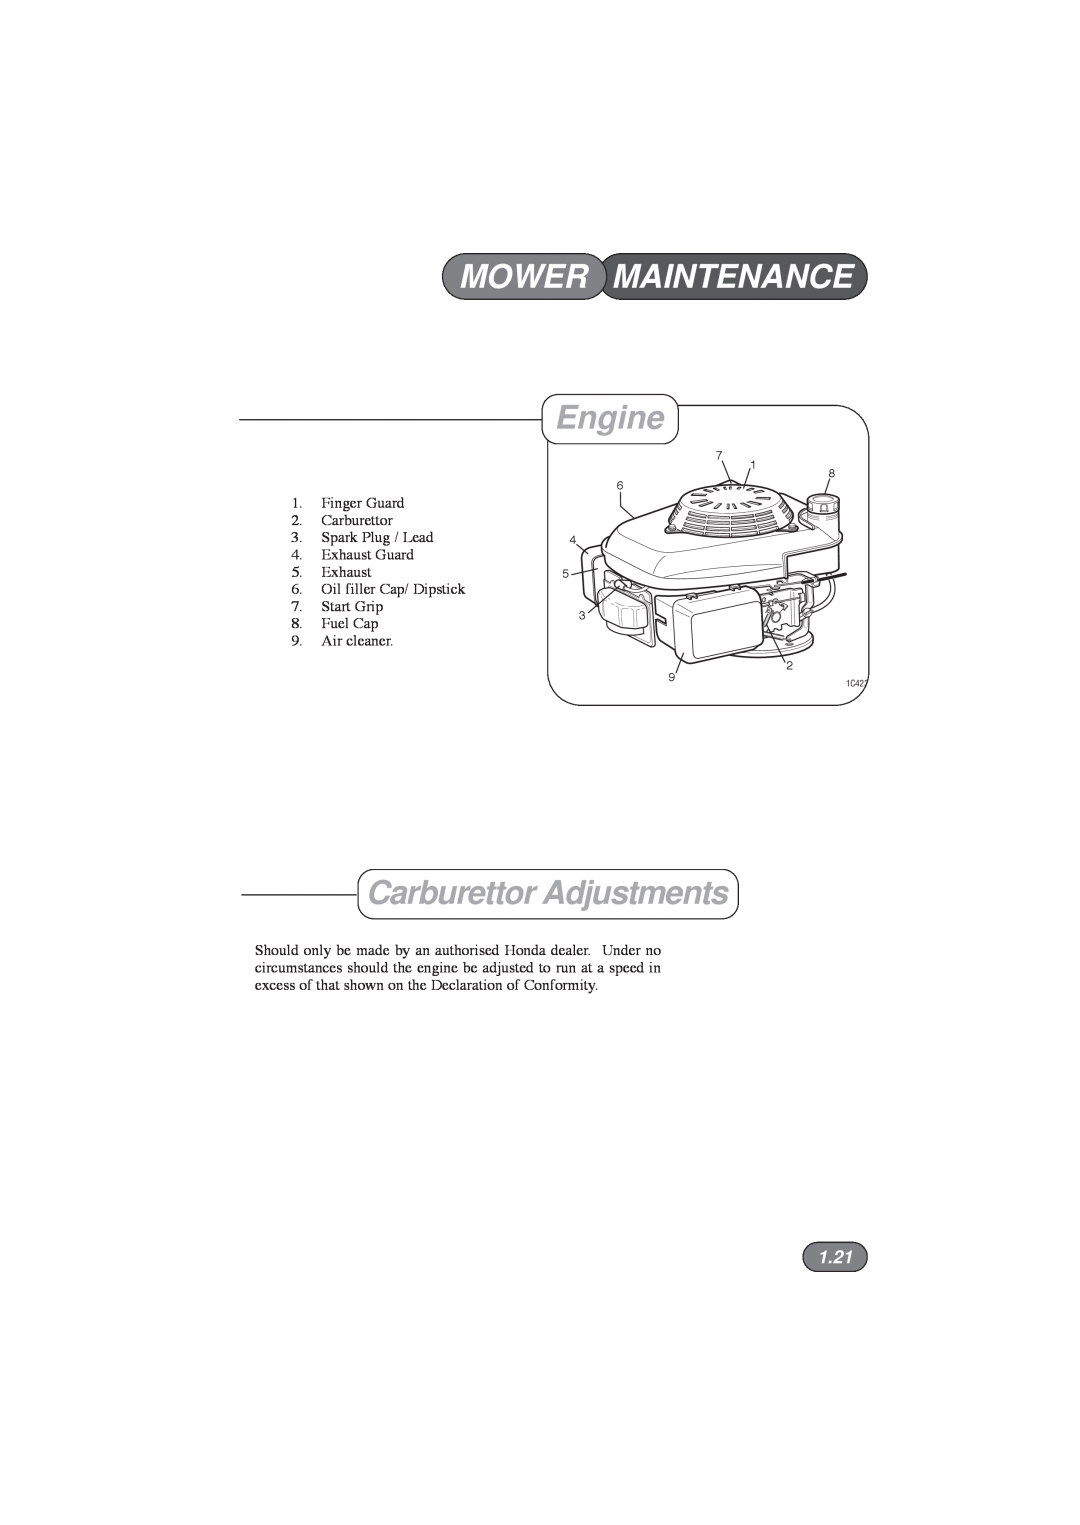 Hayter Mowers 432E, 435E, 434E, 433E manual Mower Maintenance, Engine, Carburettor Adjustments, 1.21 